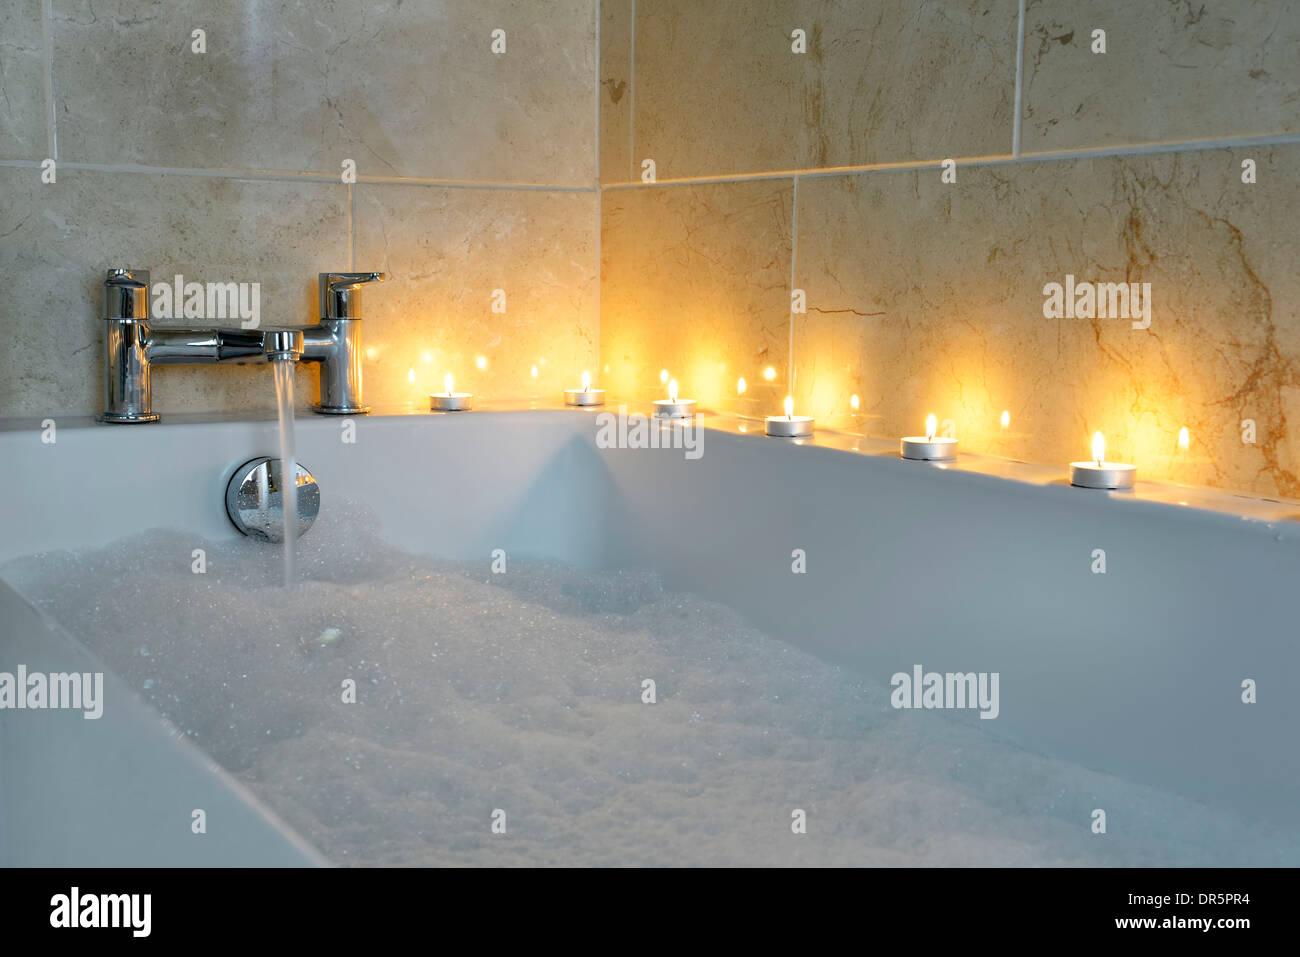 Bañera con velas fotografías e imágenes de alta resolución - Alamy